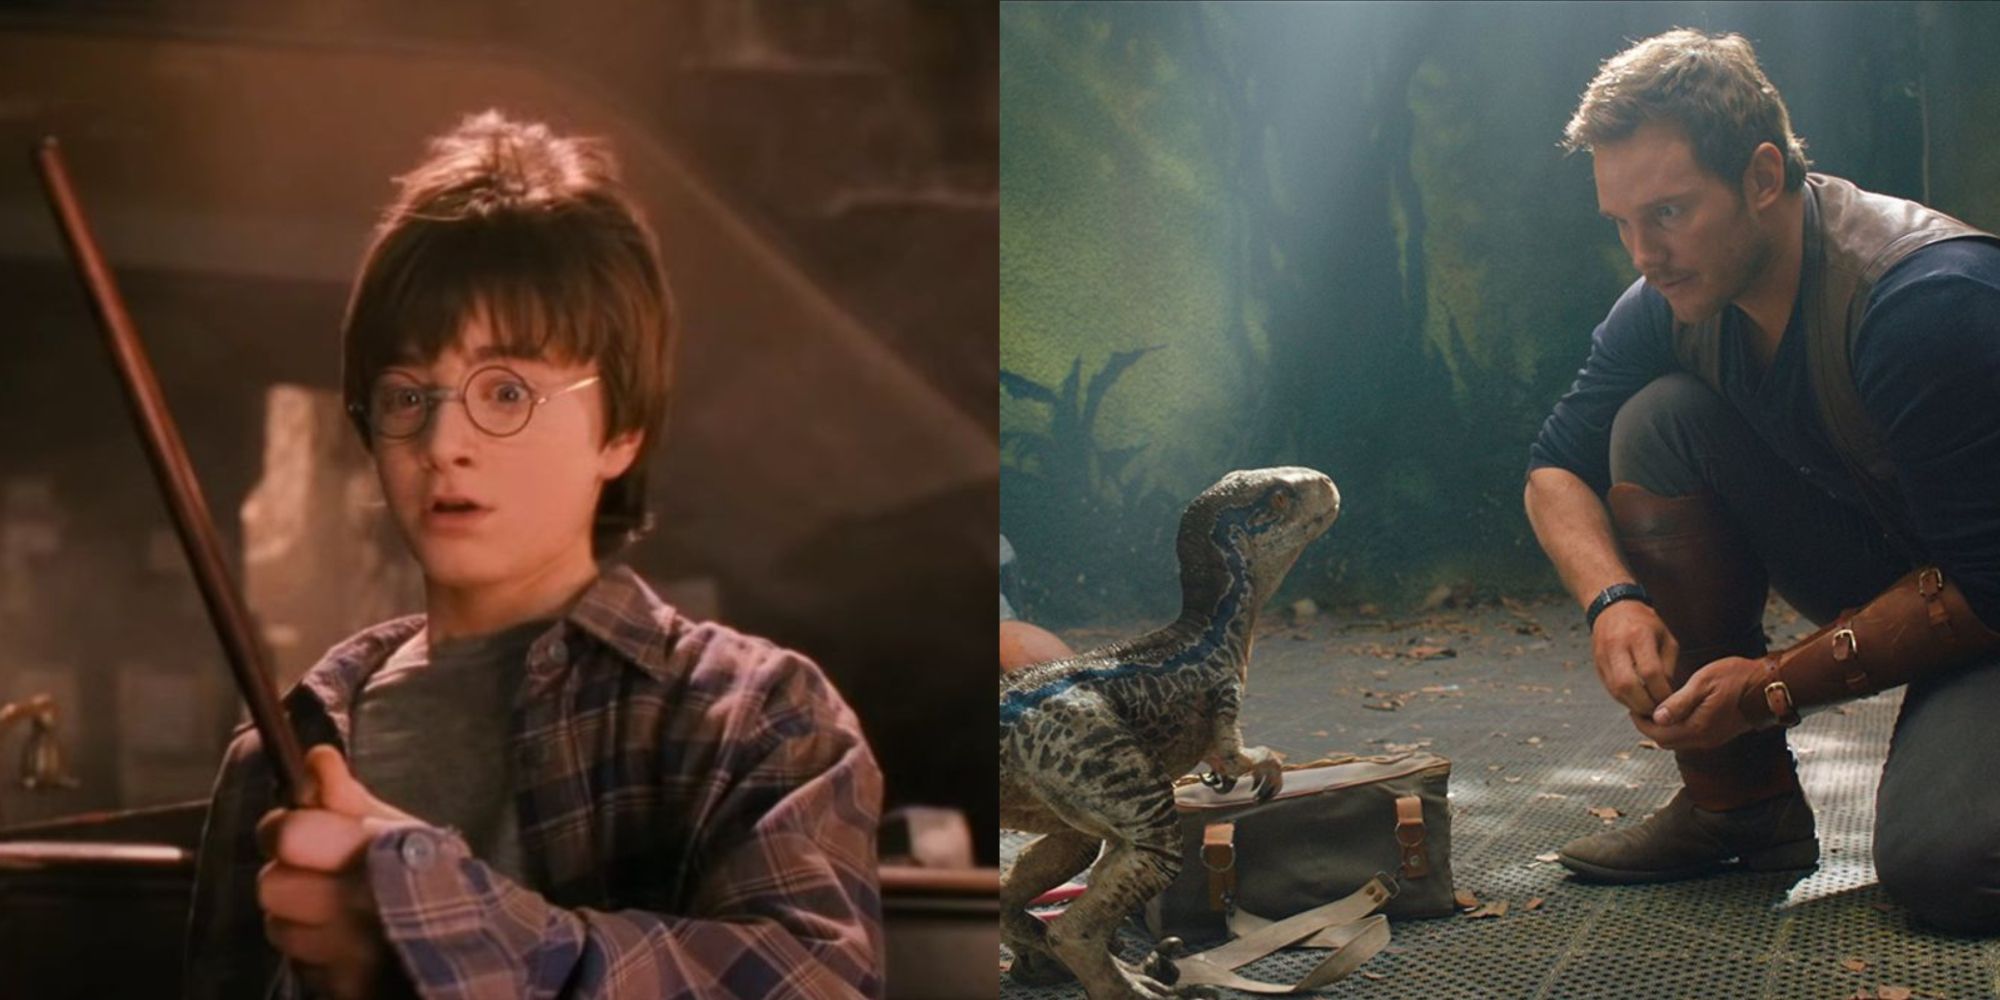 Daniel Radcliffe in Harry Potter, Chris Pratt in Jurassic World